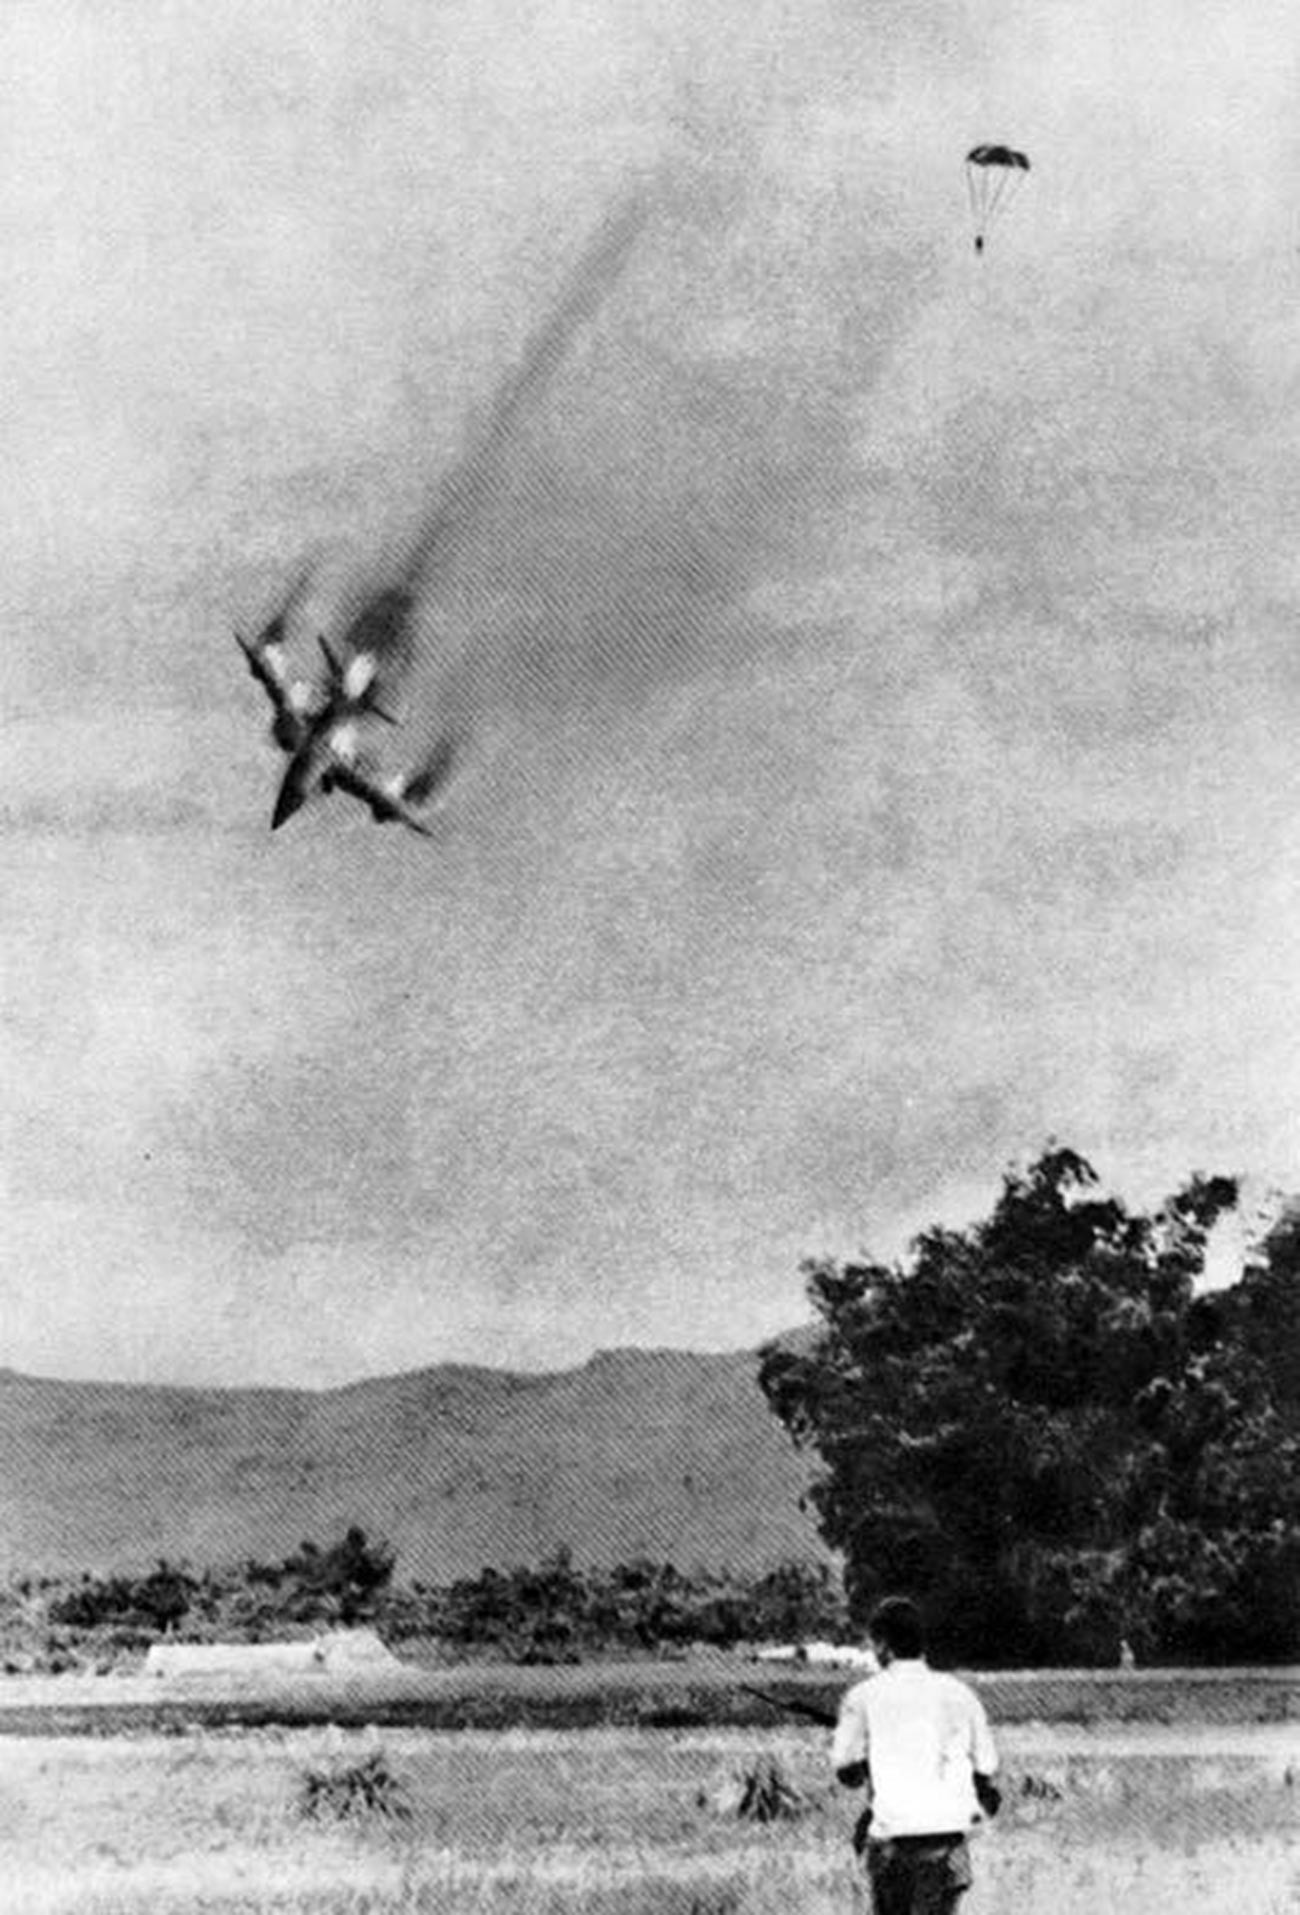 A U.S. military aircraft shot down in Vietnam.